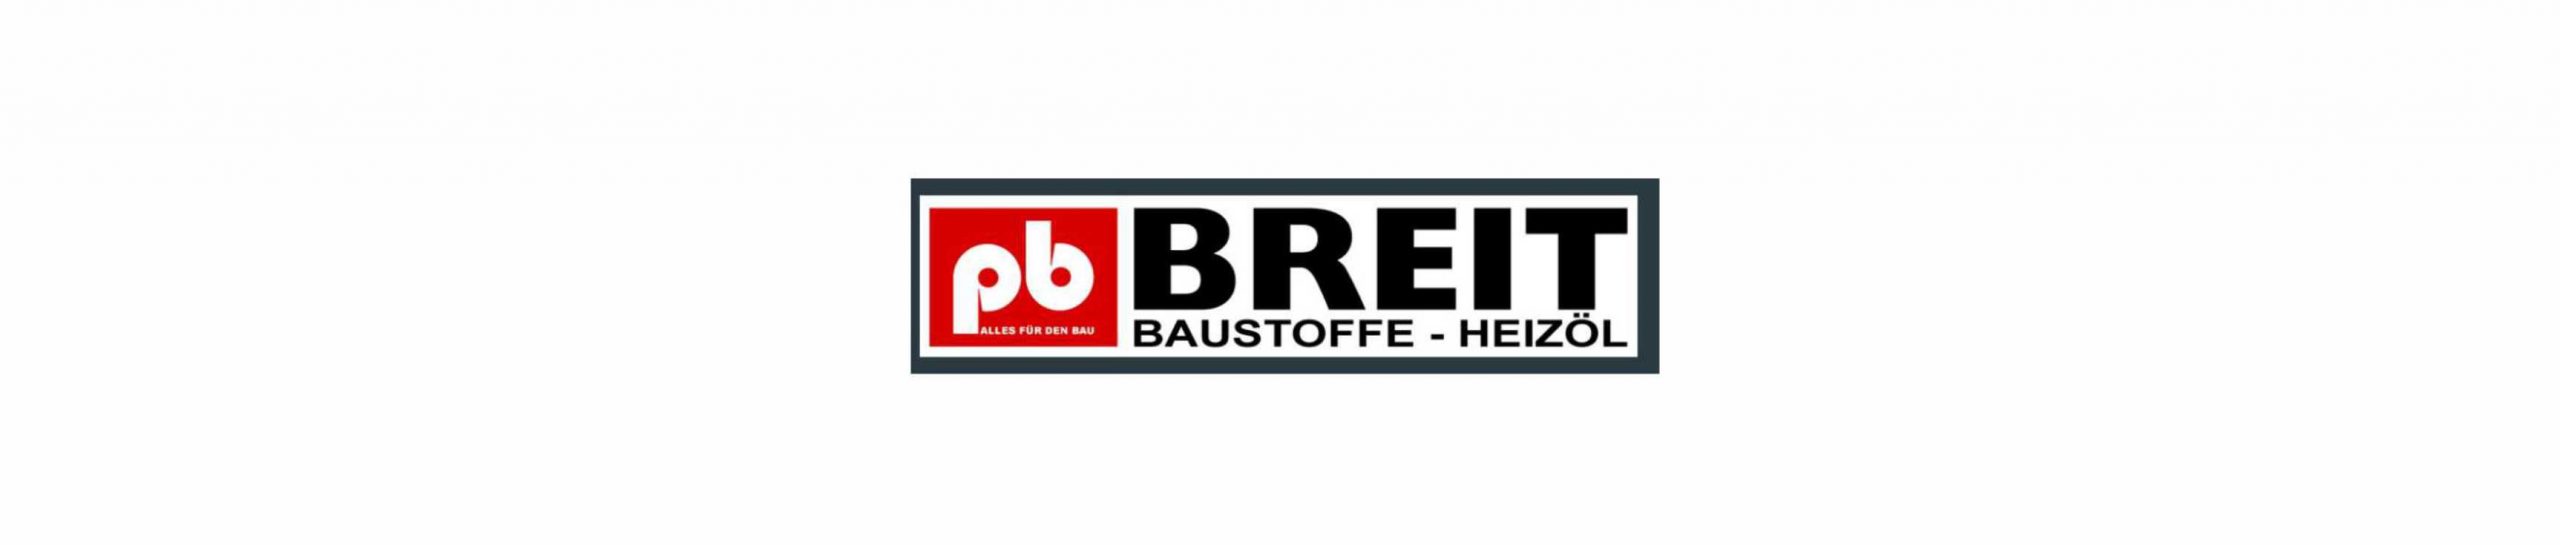 Peter Breit GmbH Baustoffe Poelert